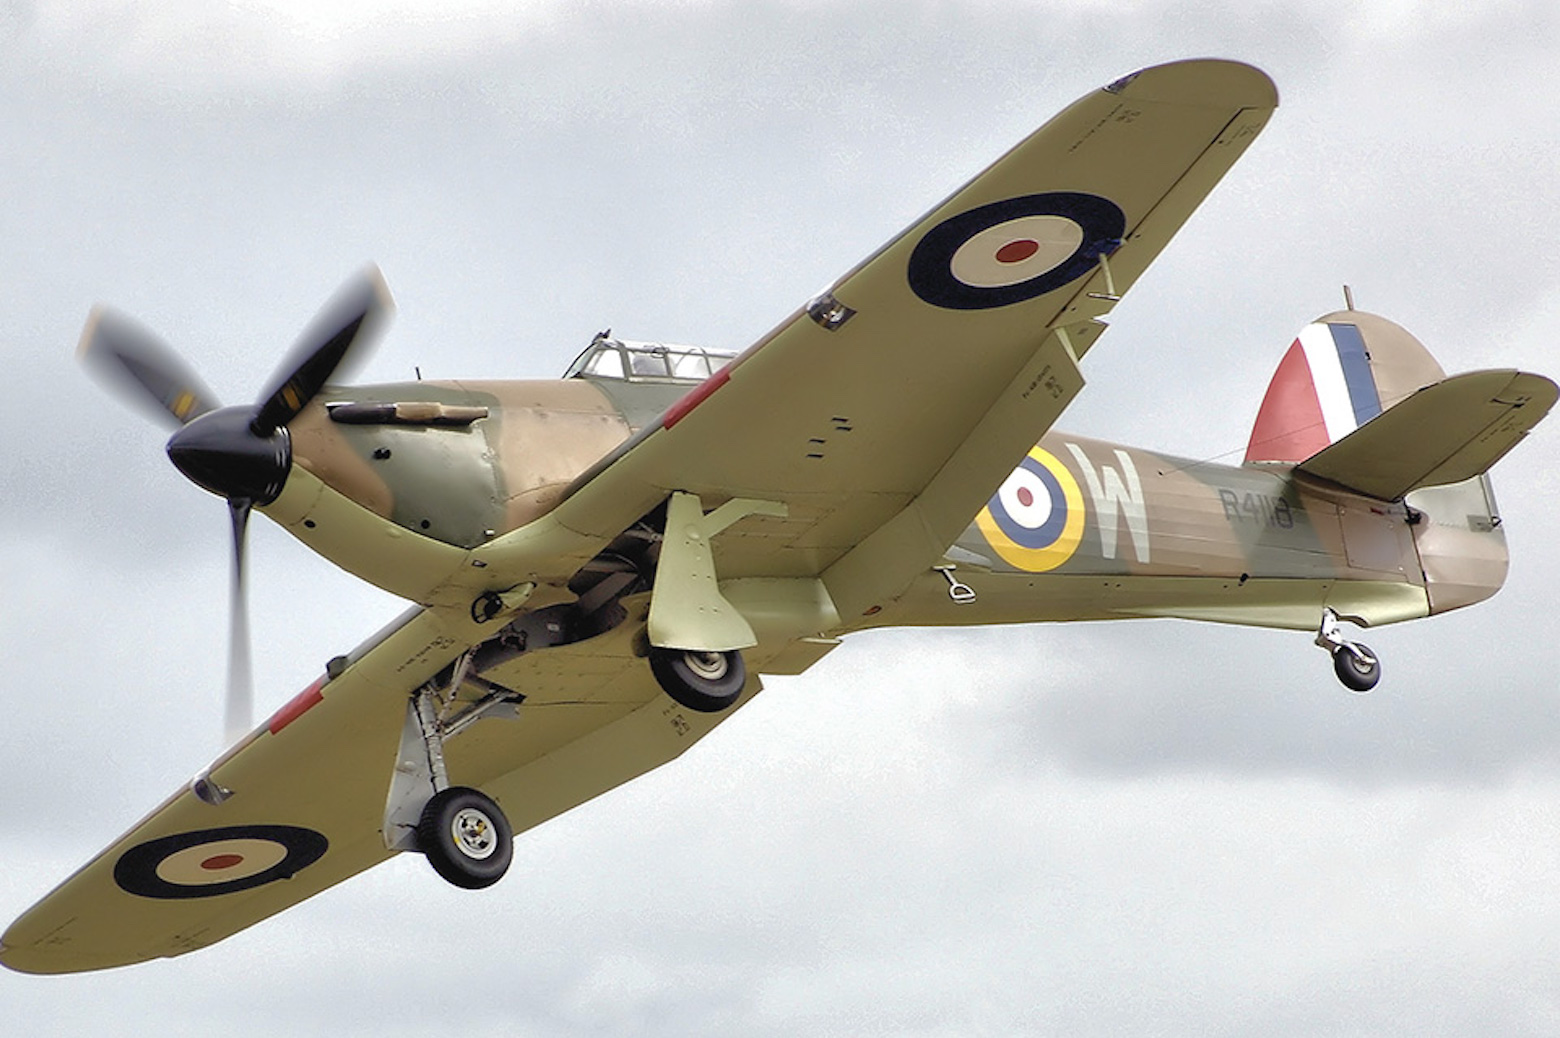 The Hawker Hurricane flying